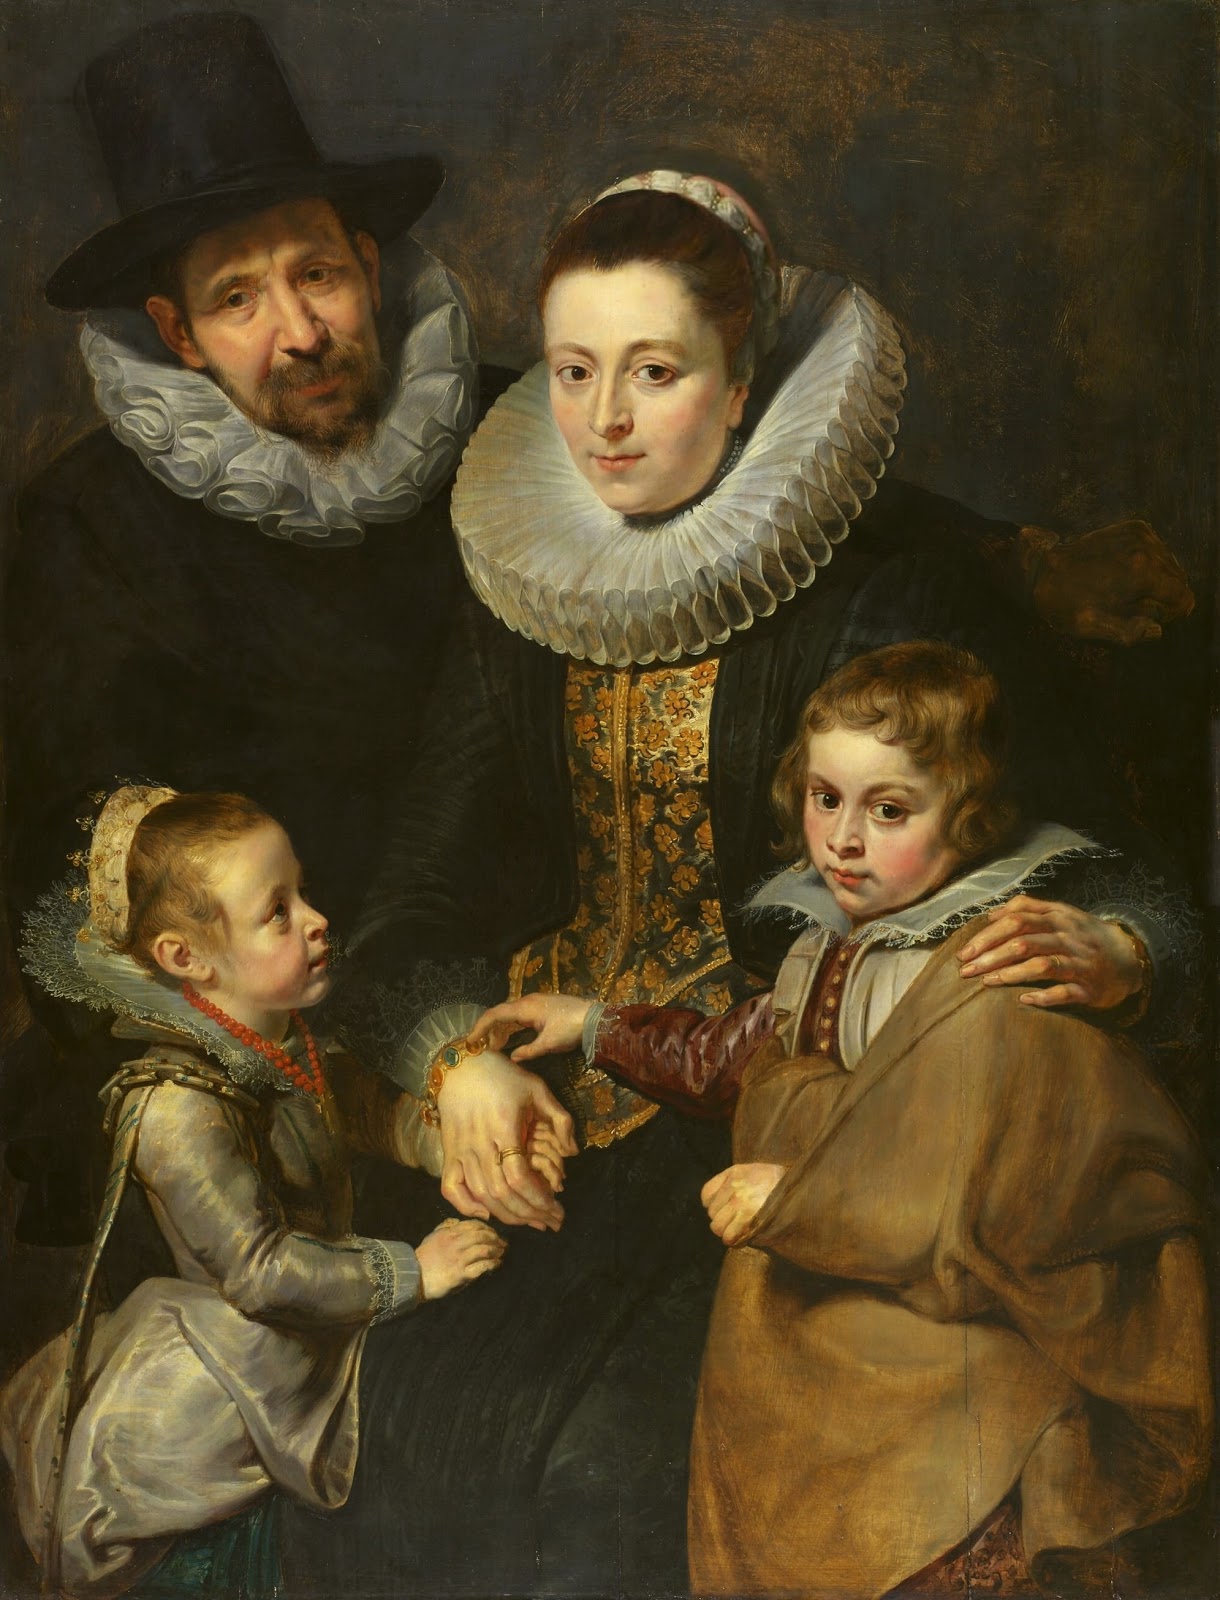 Peter+Paul+Rubens-1577-1640 (110).jpg